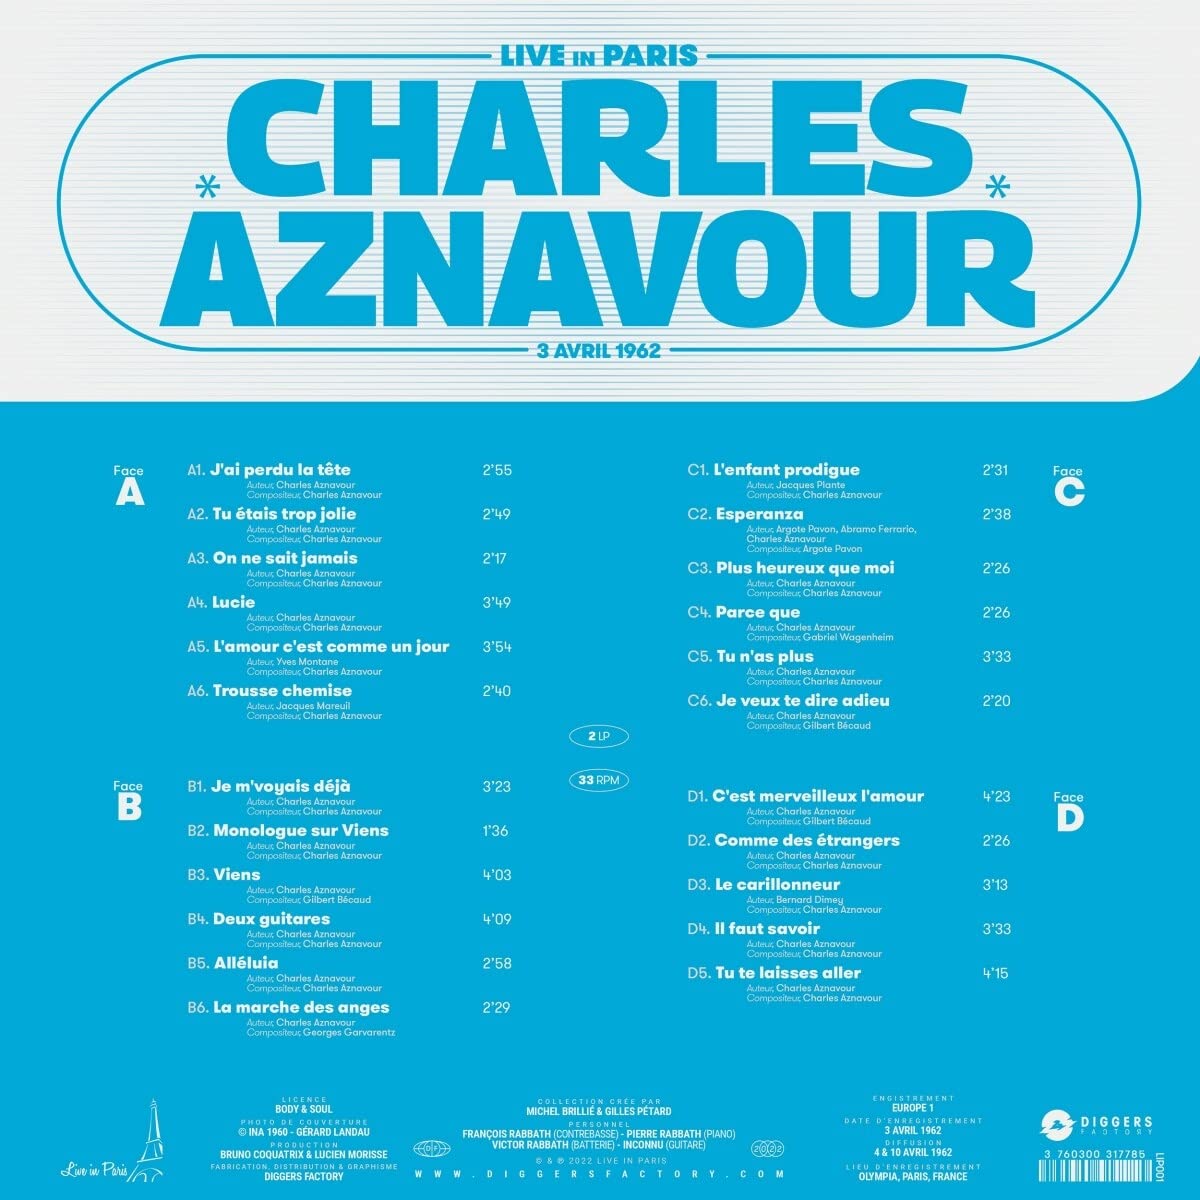 Charles Aznavour (샤를 아즈나부르) - Live in Paris, The Great Parisian Concert Series [2LP] 